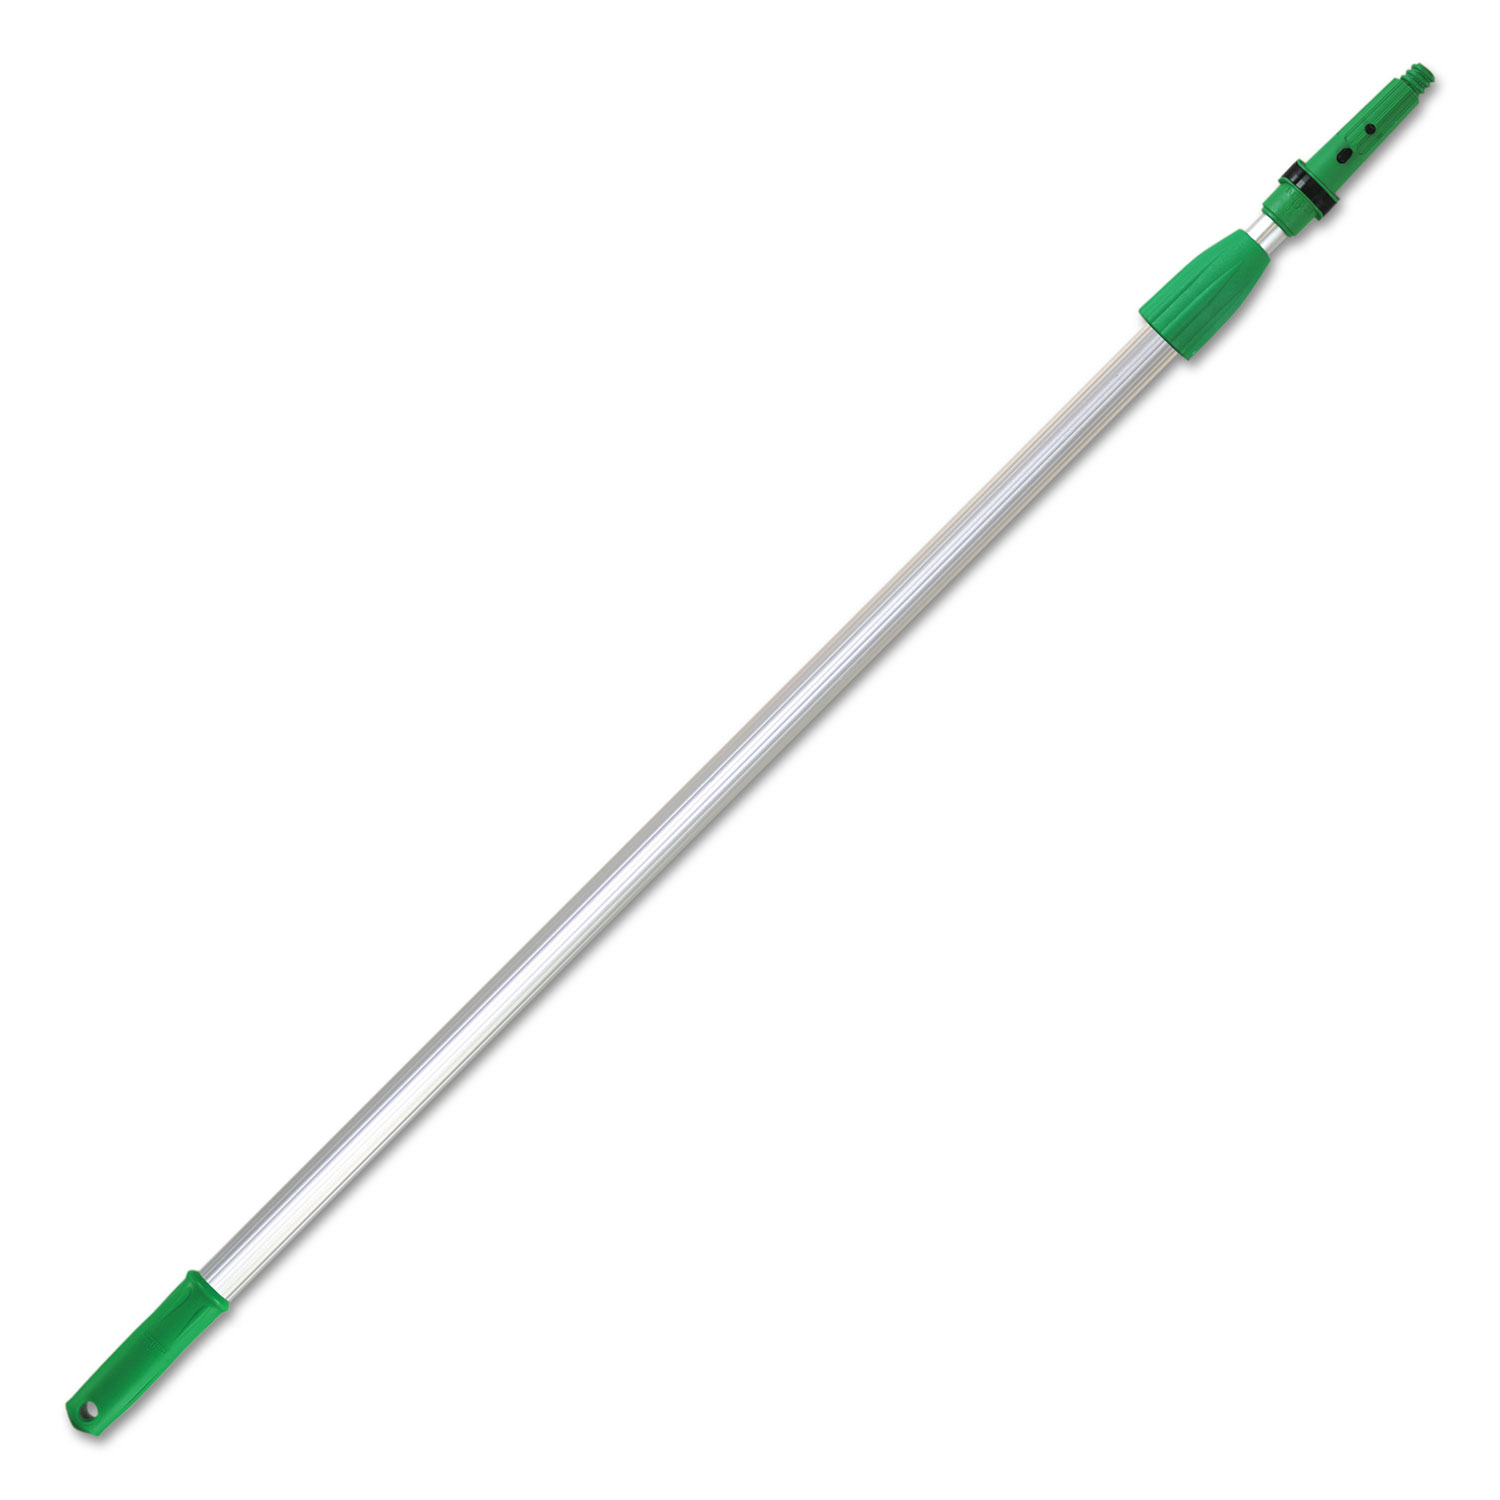  Unger EZ120 Opti-Loc Aluminum Extension Pole, 4 ft, Two Sections, Green/Silver (UNGEZ120) 